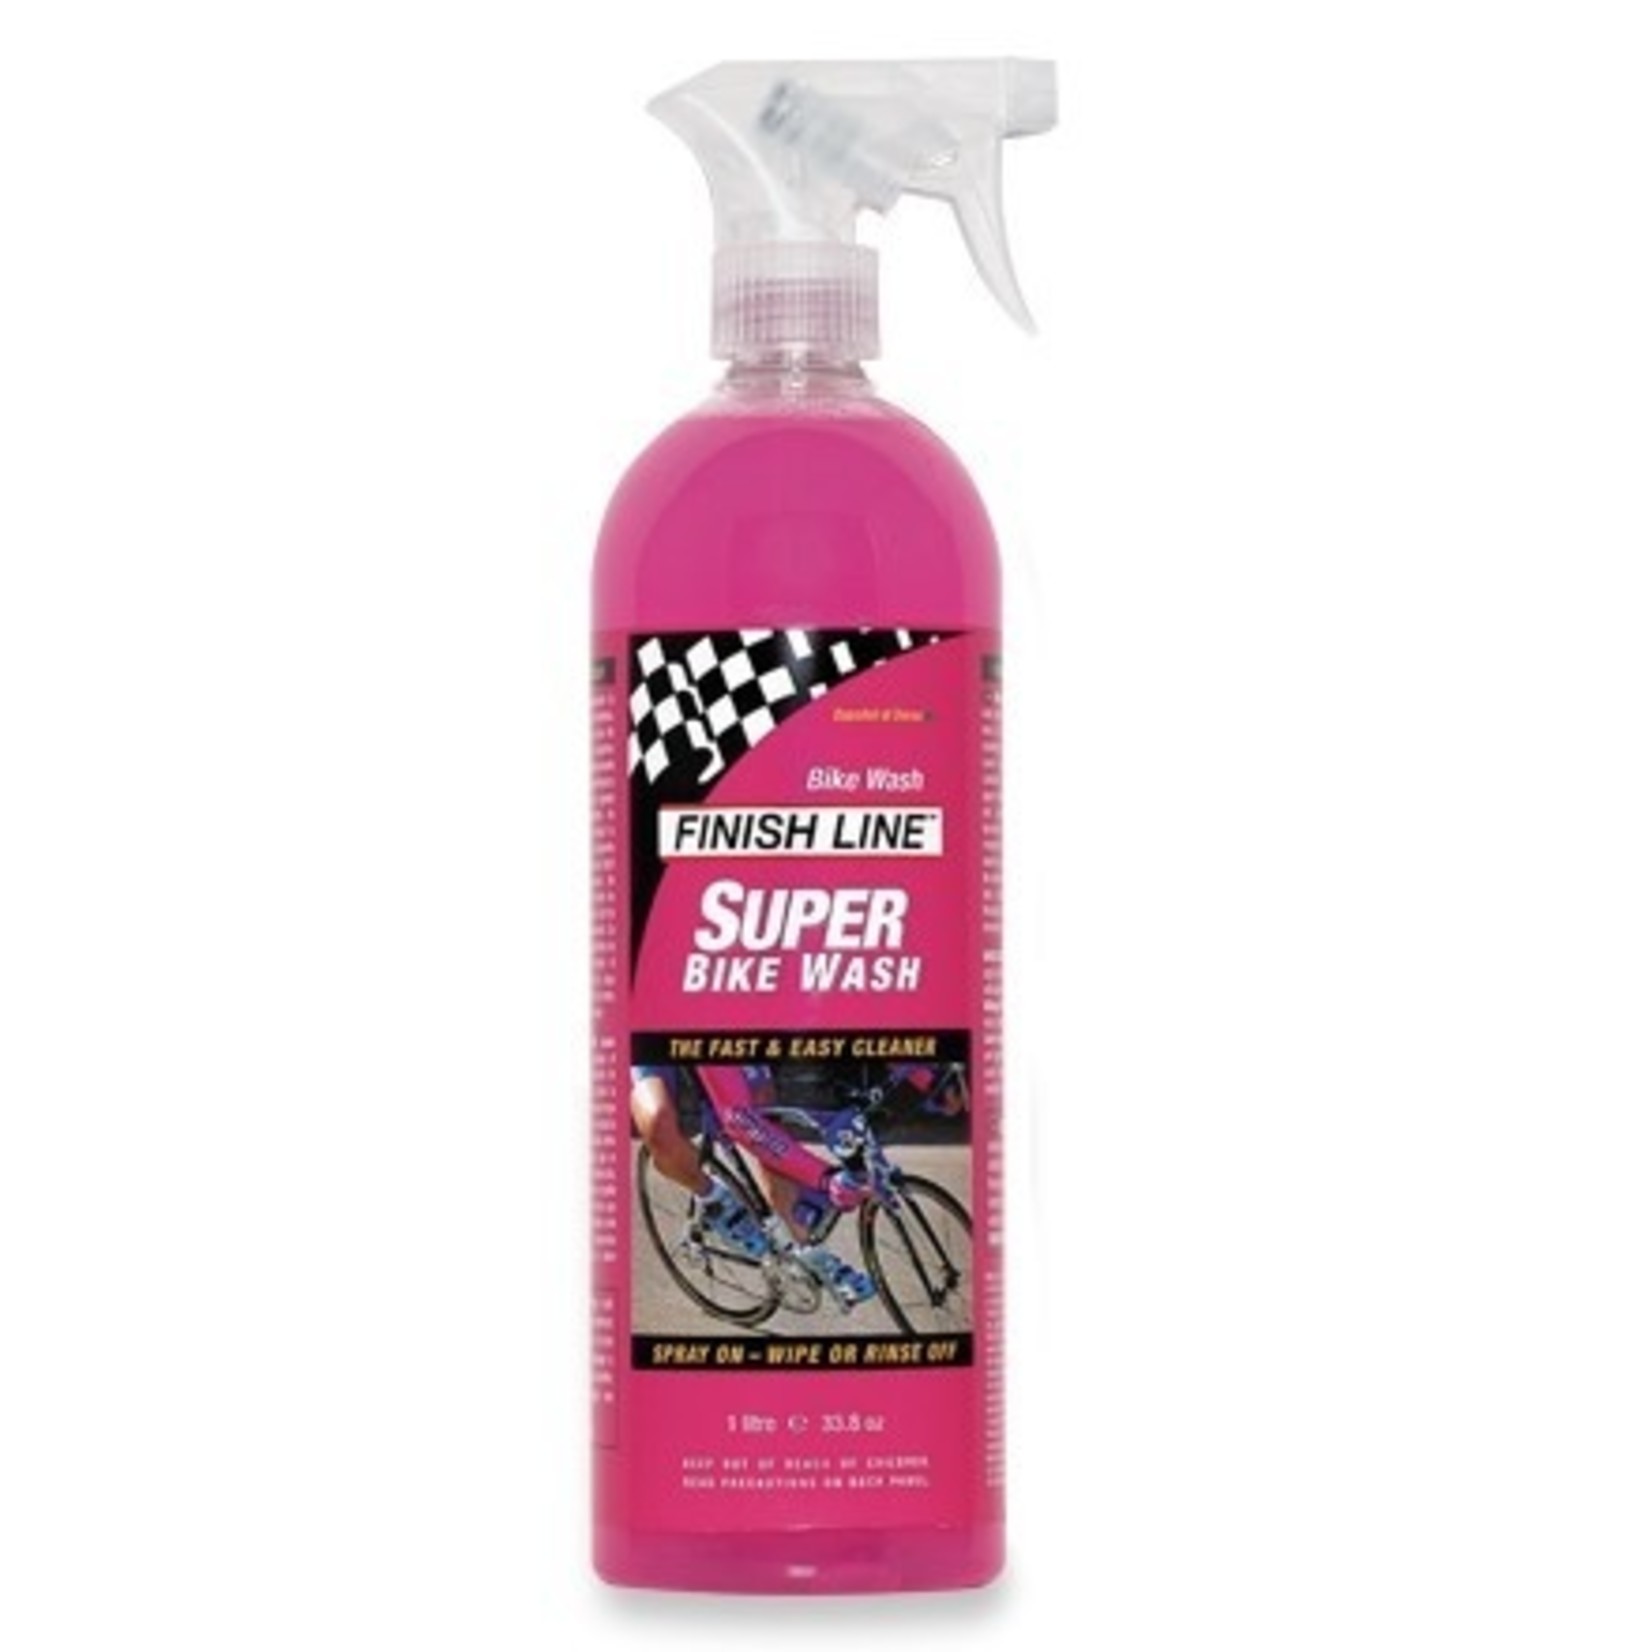 FINISH LINE Super Bike Wash 33.8oz Spray